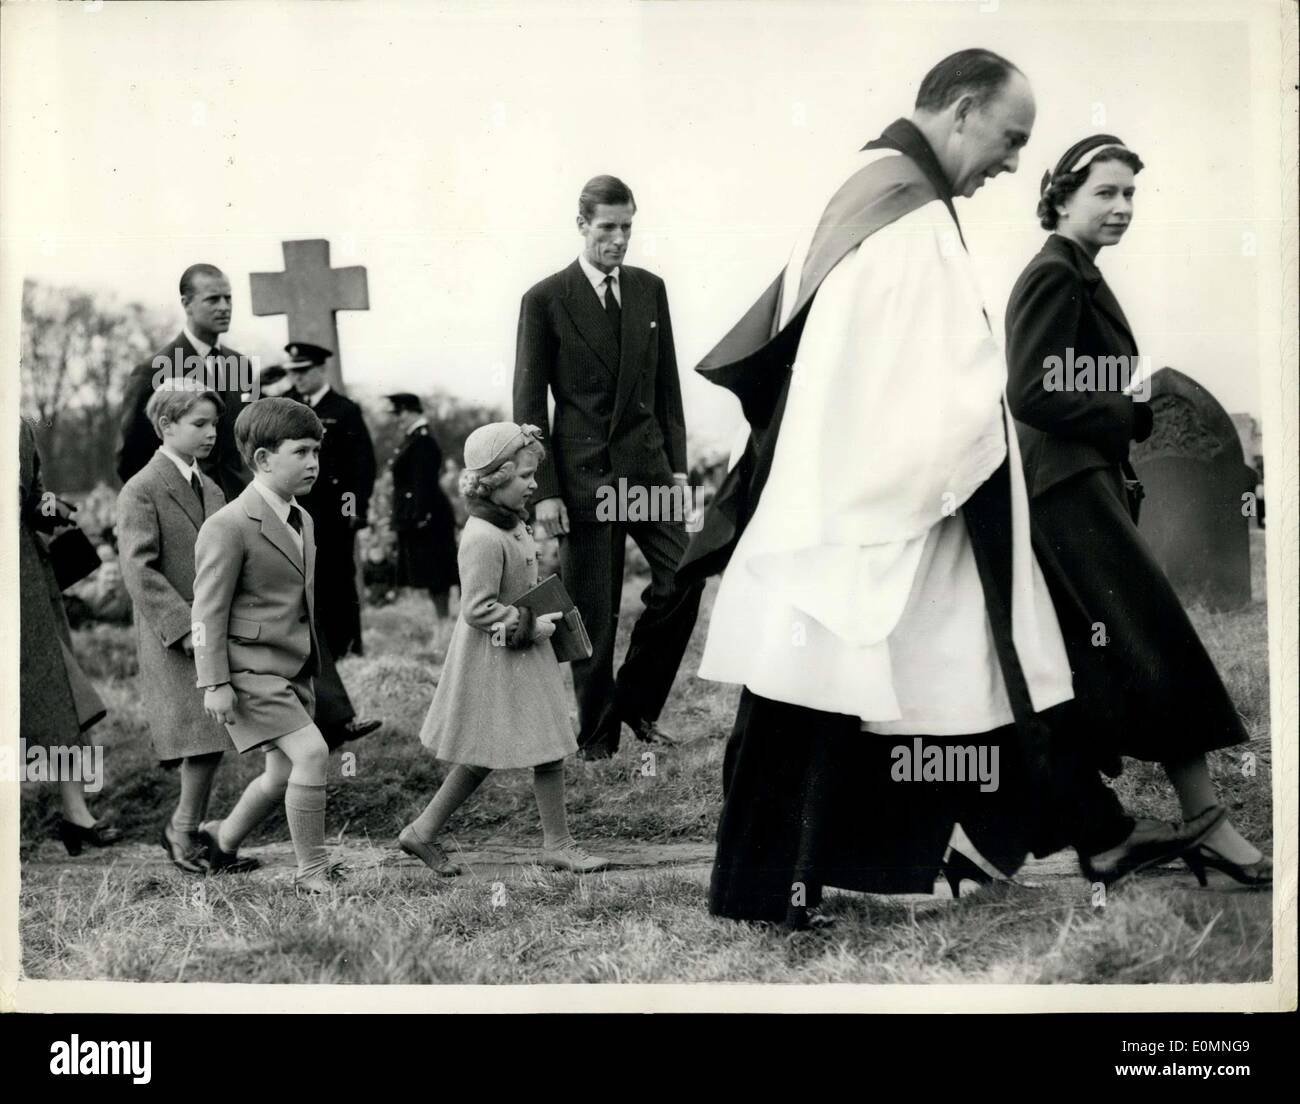 mar-25-1956-the-royal-family-attend-church-service-at-lubenham-parish-E0MNG9.jpg